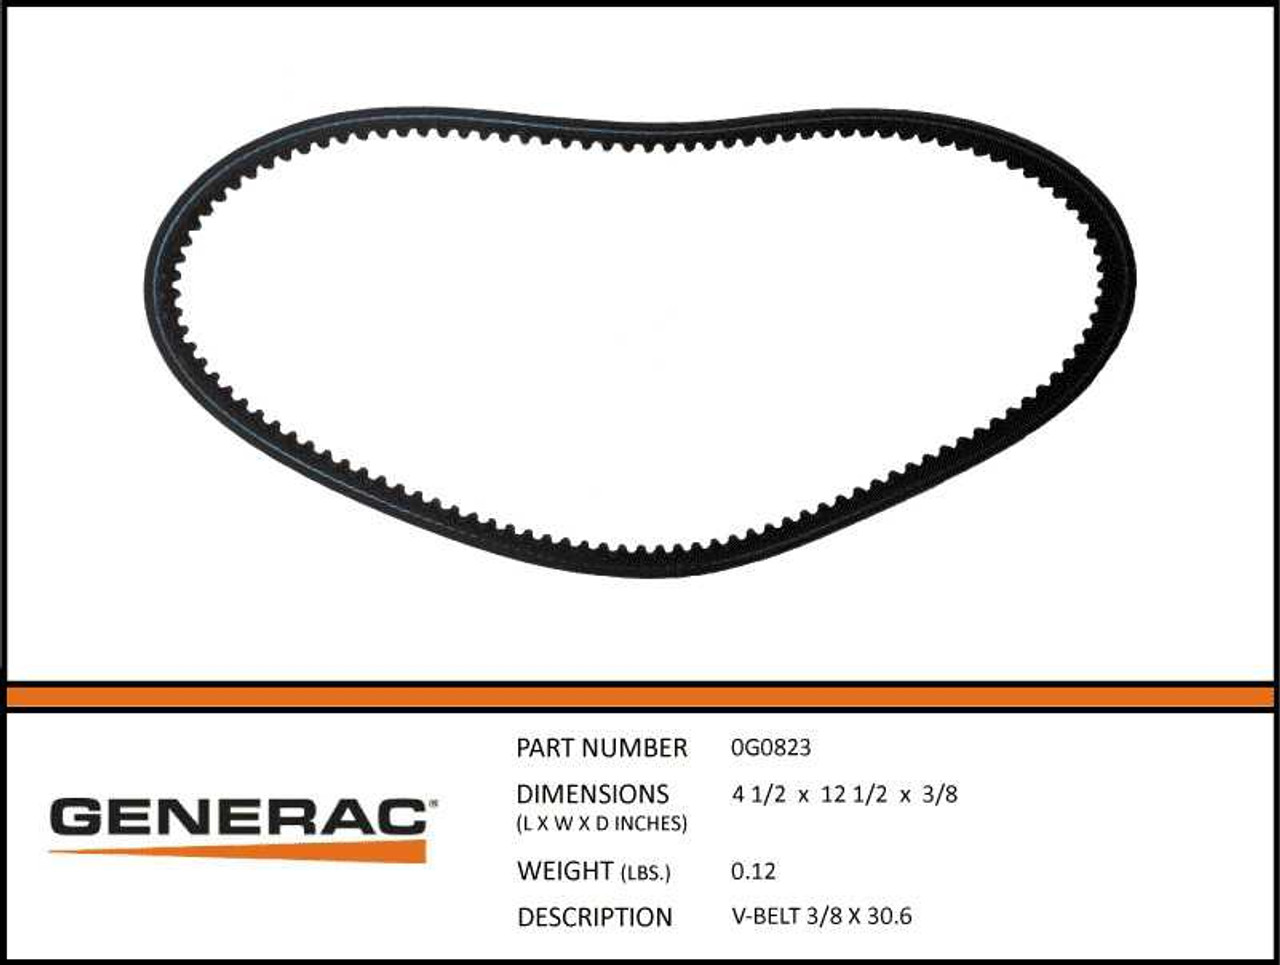 Generac 0G0823 3/8 V-Belt